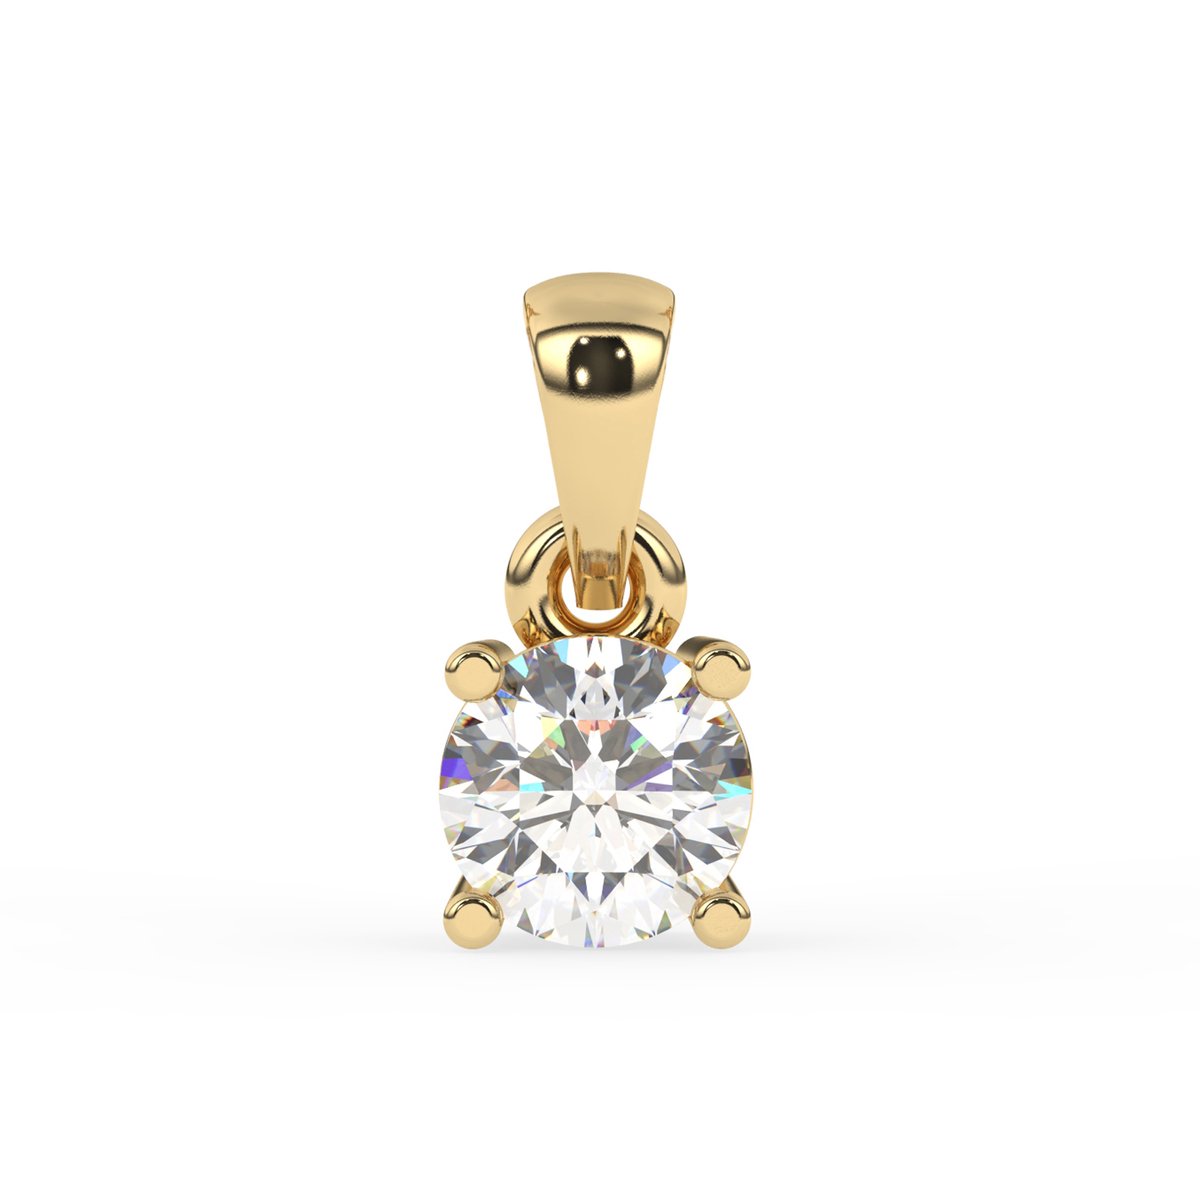 Diamo Diamonds 9-DD013-YG-40-P Gouden Hangertje met Diamant - Dames - Lab Grown Diamond - 0,40ct - Recycled Goud - 14 Karaat - Chatonzetting - Geelgoud